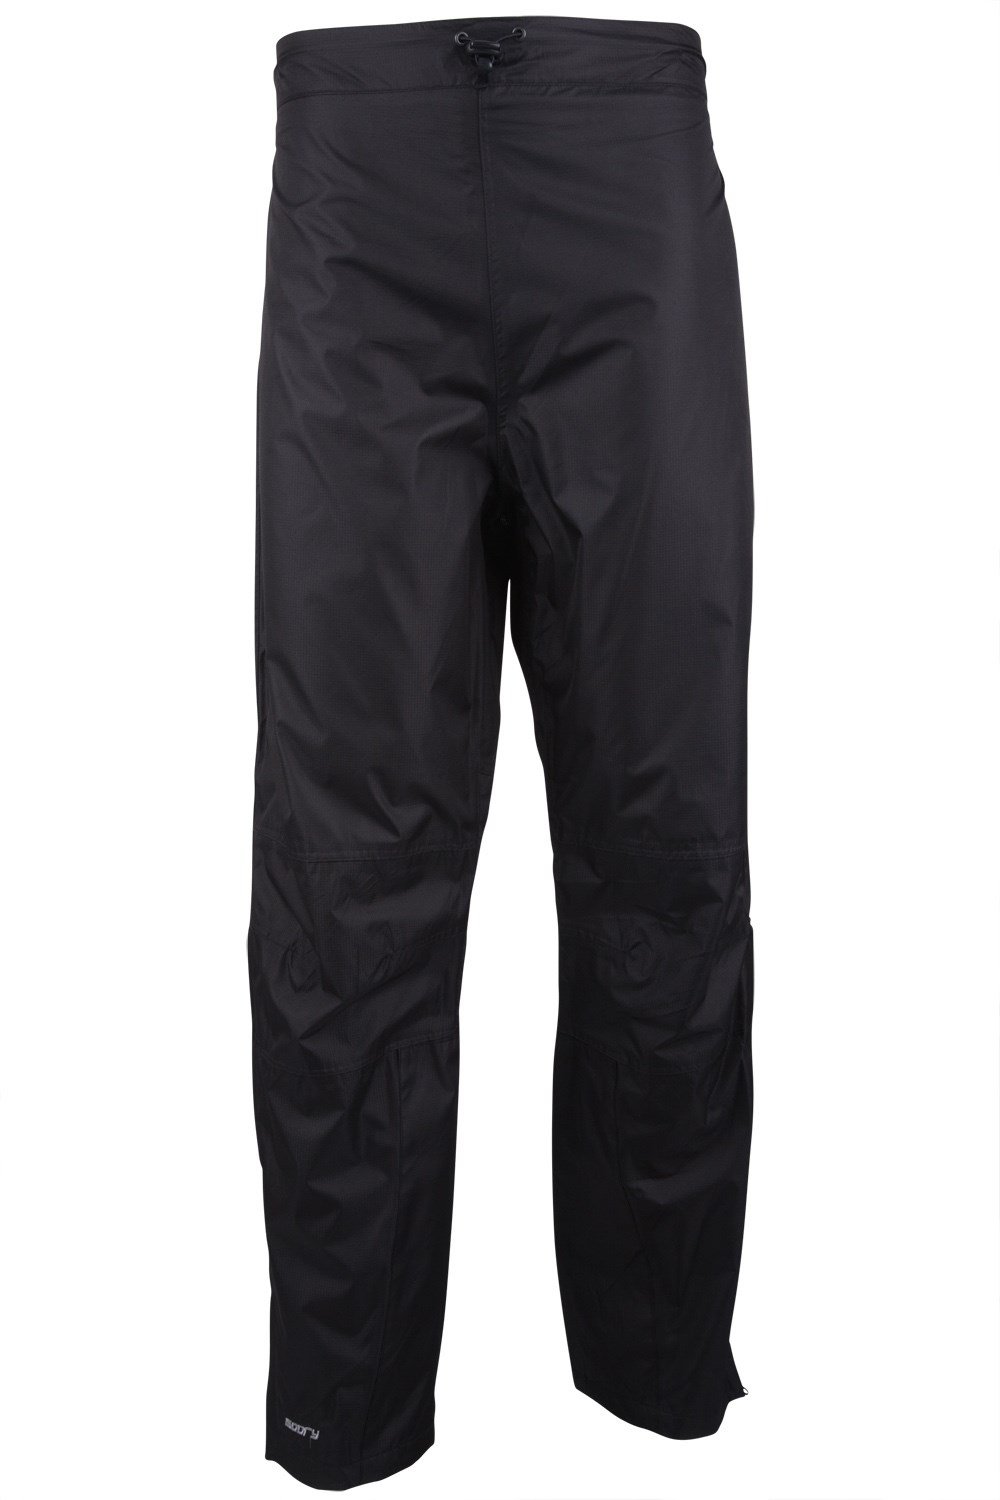 Spray Mens Waterproof Short Length Trousers - Black | £24.99 | Bear Gyrlls